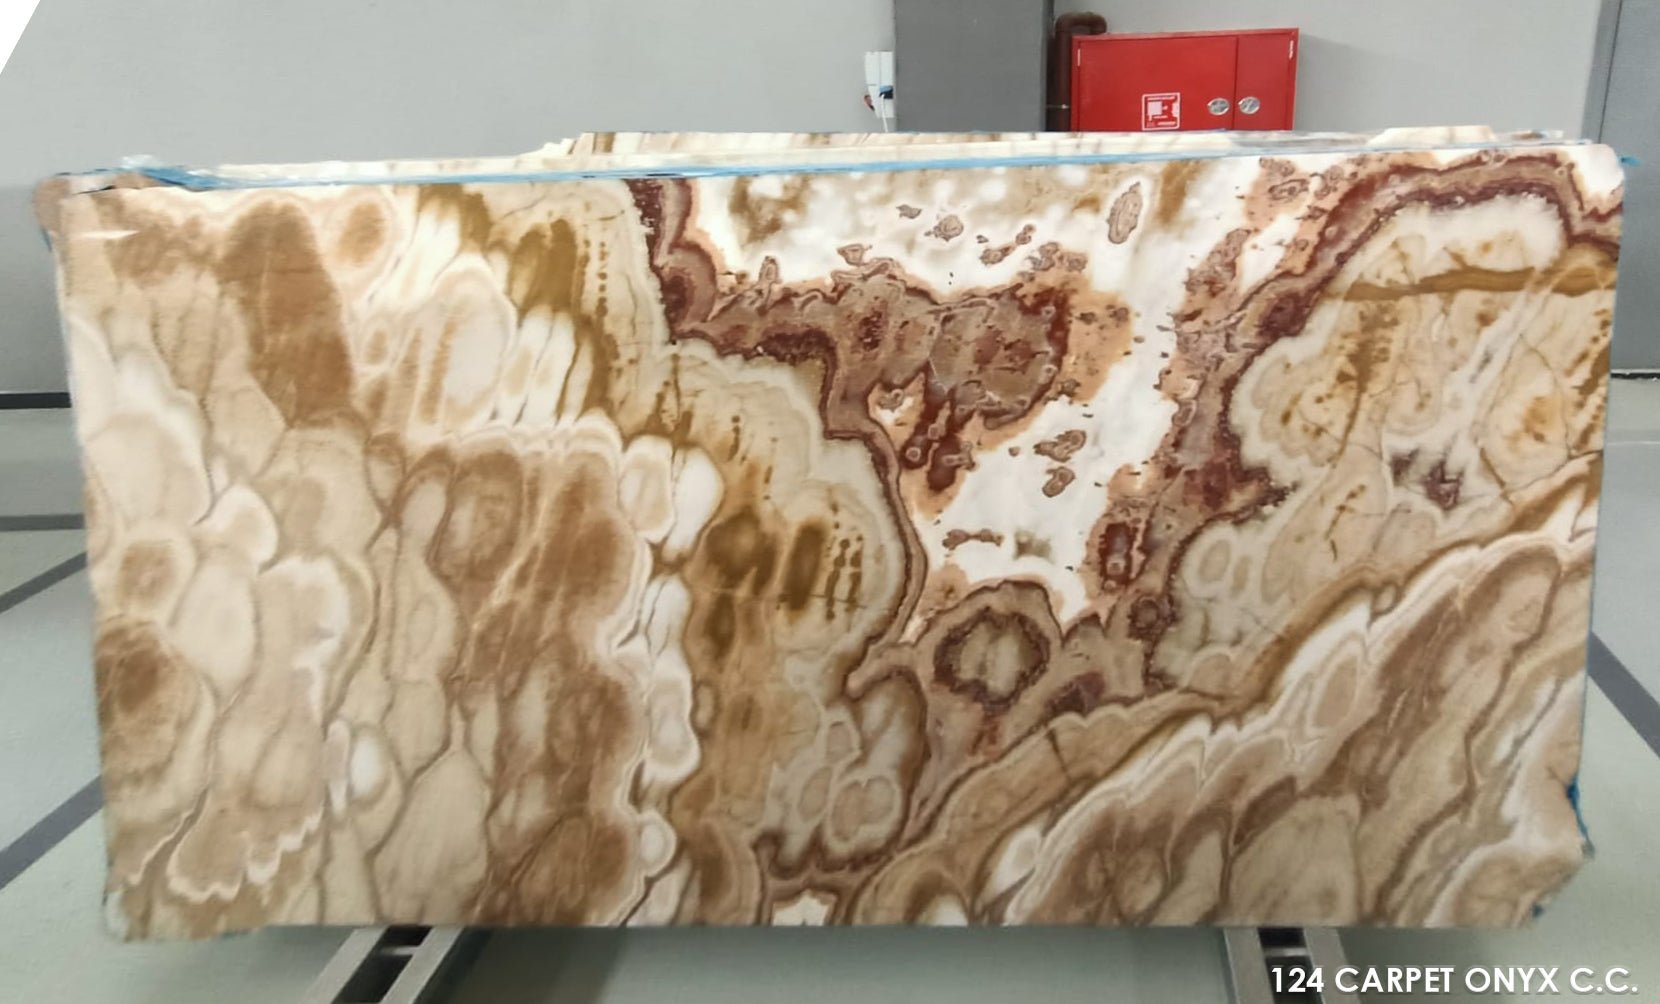 Carpet Onyx Slabs Cross Cut - S(124) - Emperor Marble